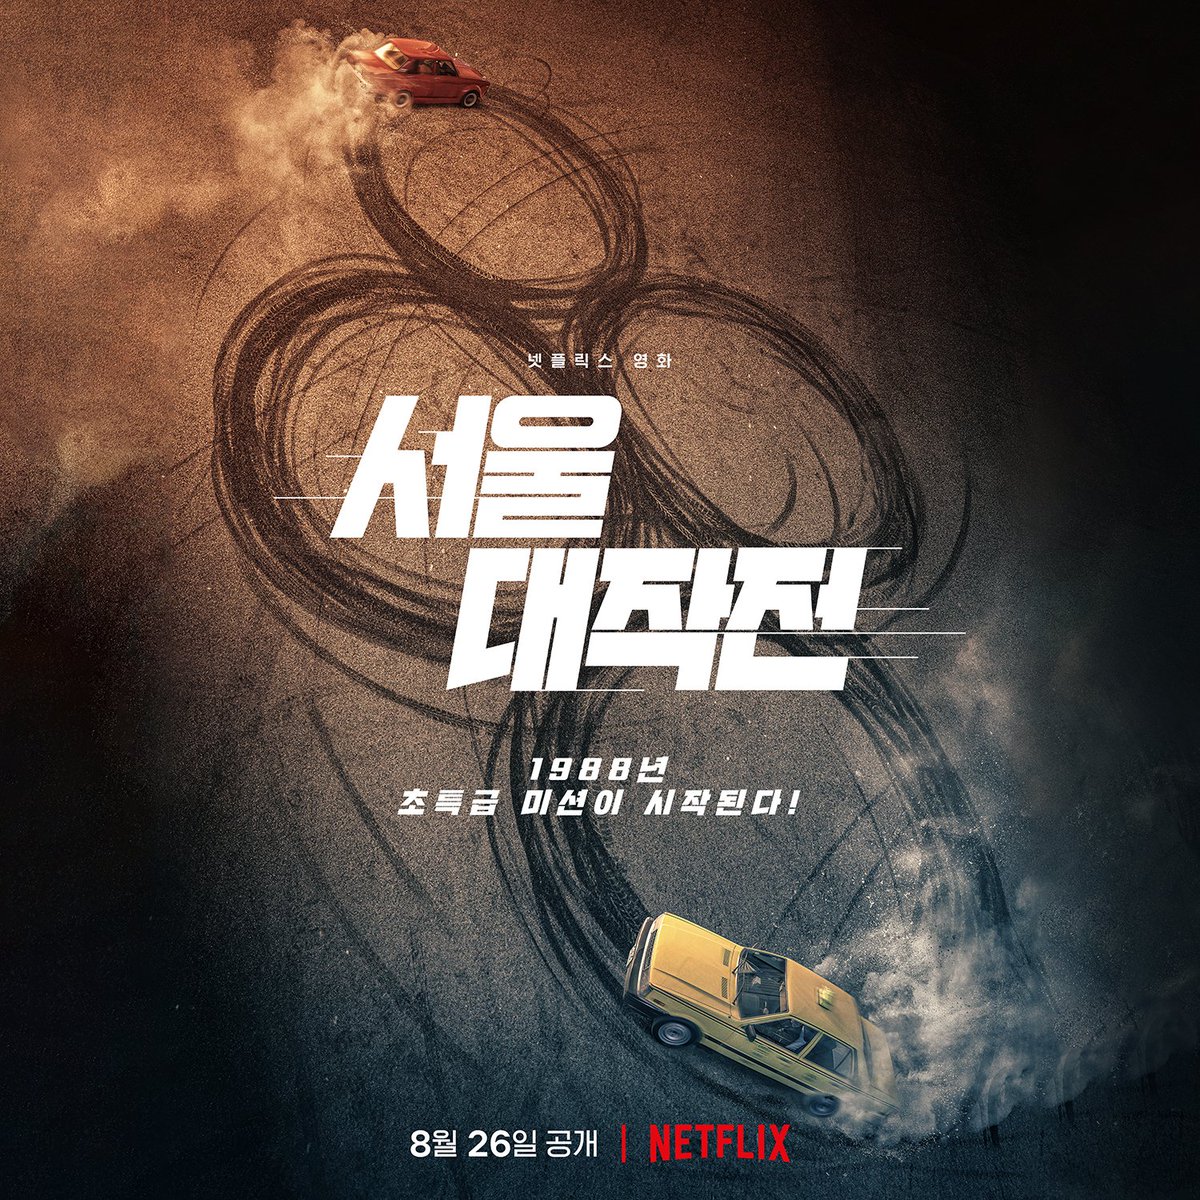 All-star Netflix movie #SeoulVibe is now confirmed for 26 Aug worldwide release!

Cast:
#YooAhIn
#KoKyungPyo
#LeeKyuHyung
#ParkJuHyun
#OngSeongwu
#OhJungSe
#KimSungKyun
#JungWoongIn
#MoonSoRi

#KoreanUpdates RZ